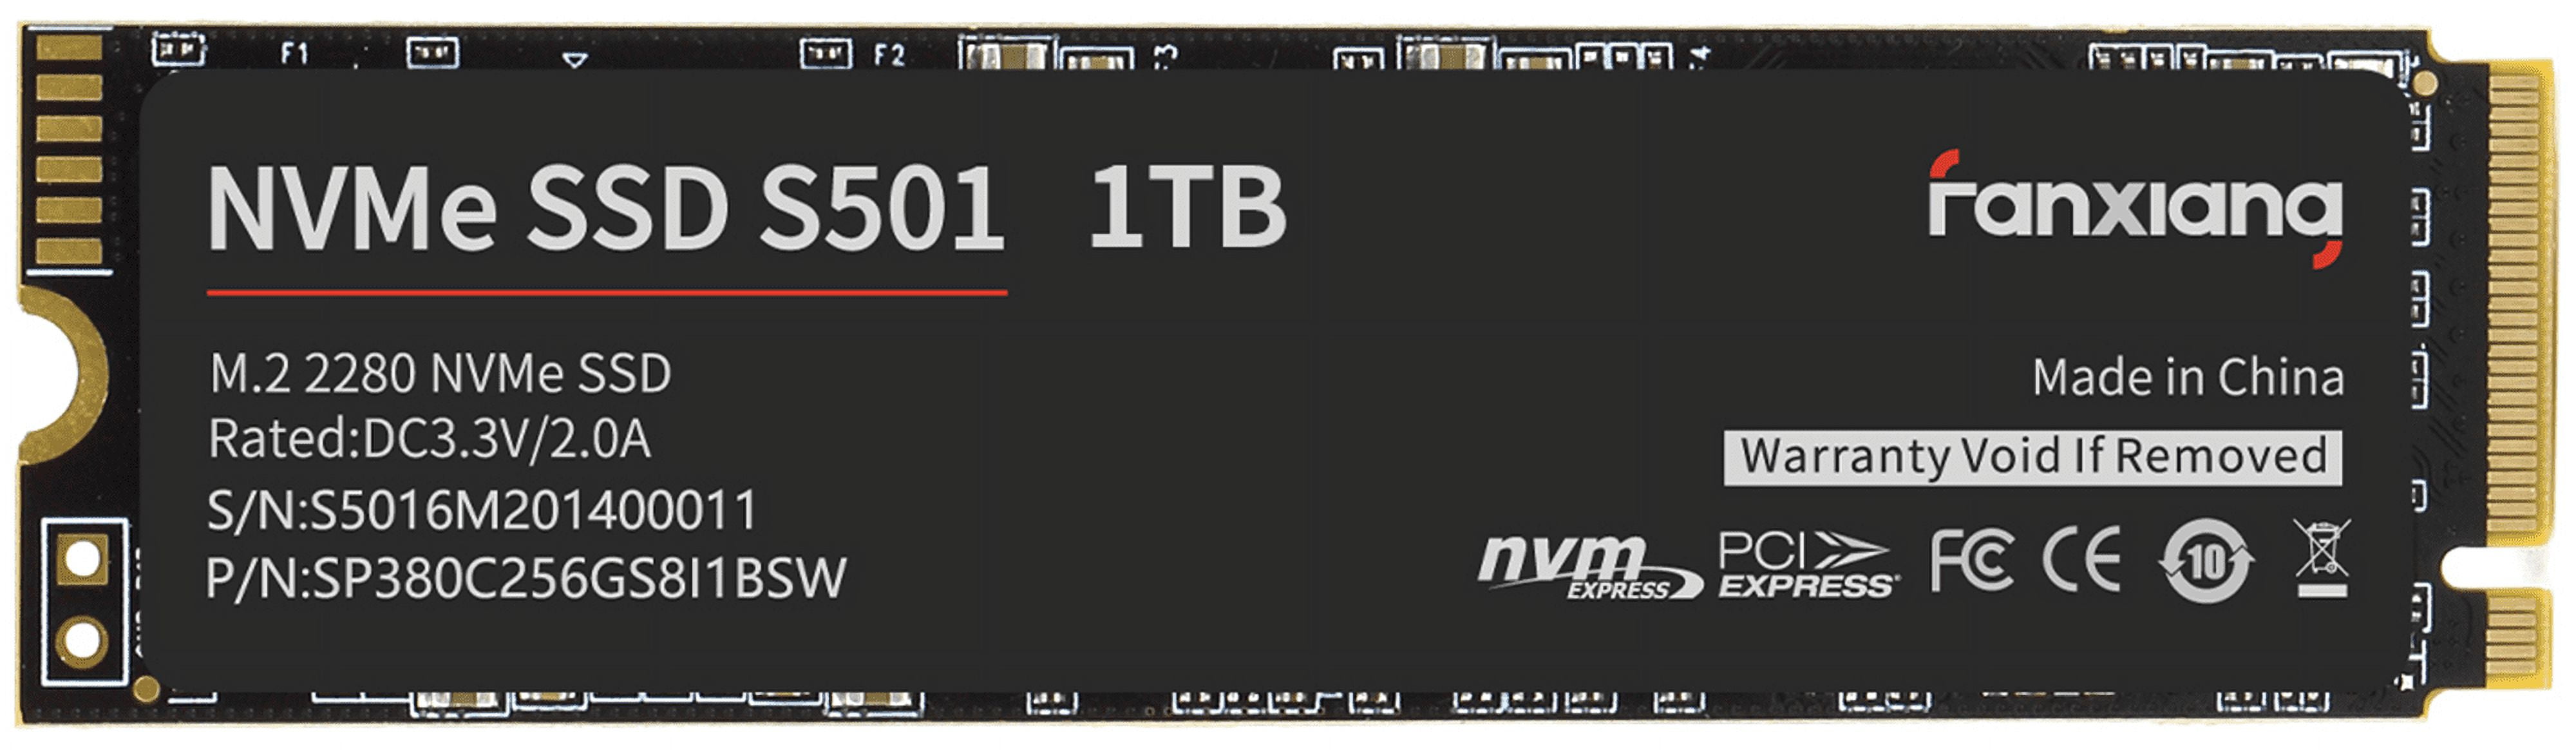 Samsung SSD 990 EVO M.2 PCIe NVMe 1 To - Disque SSD - LDLC